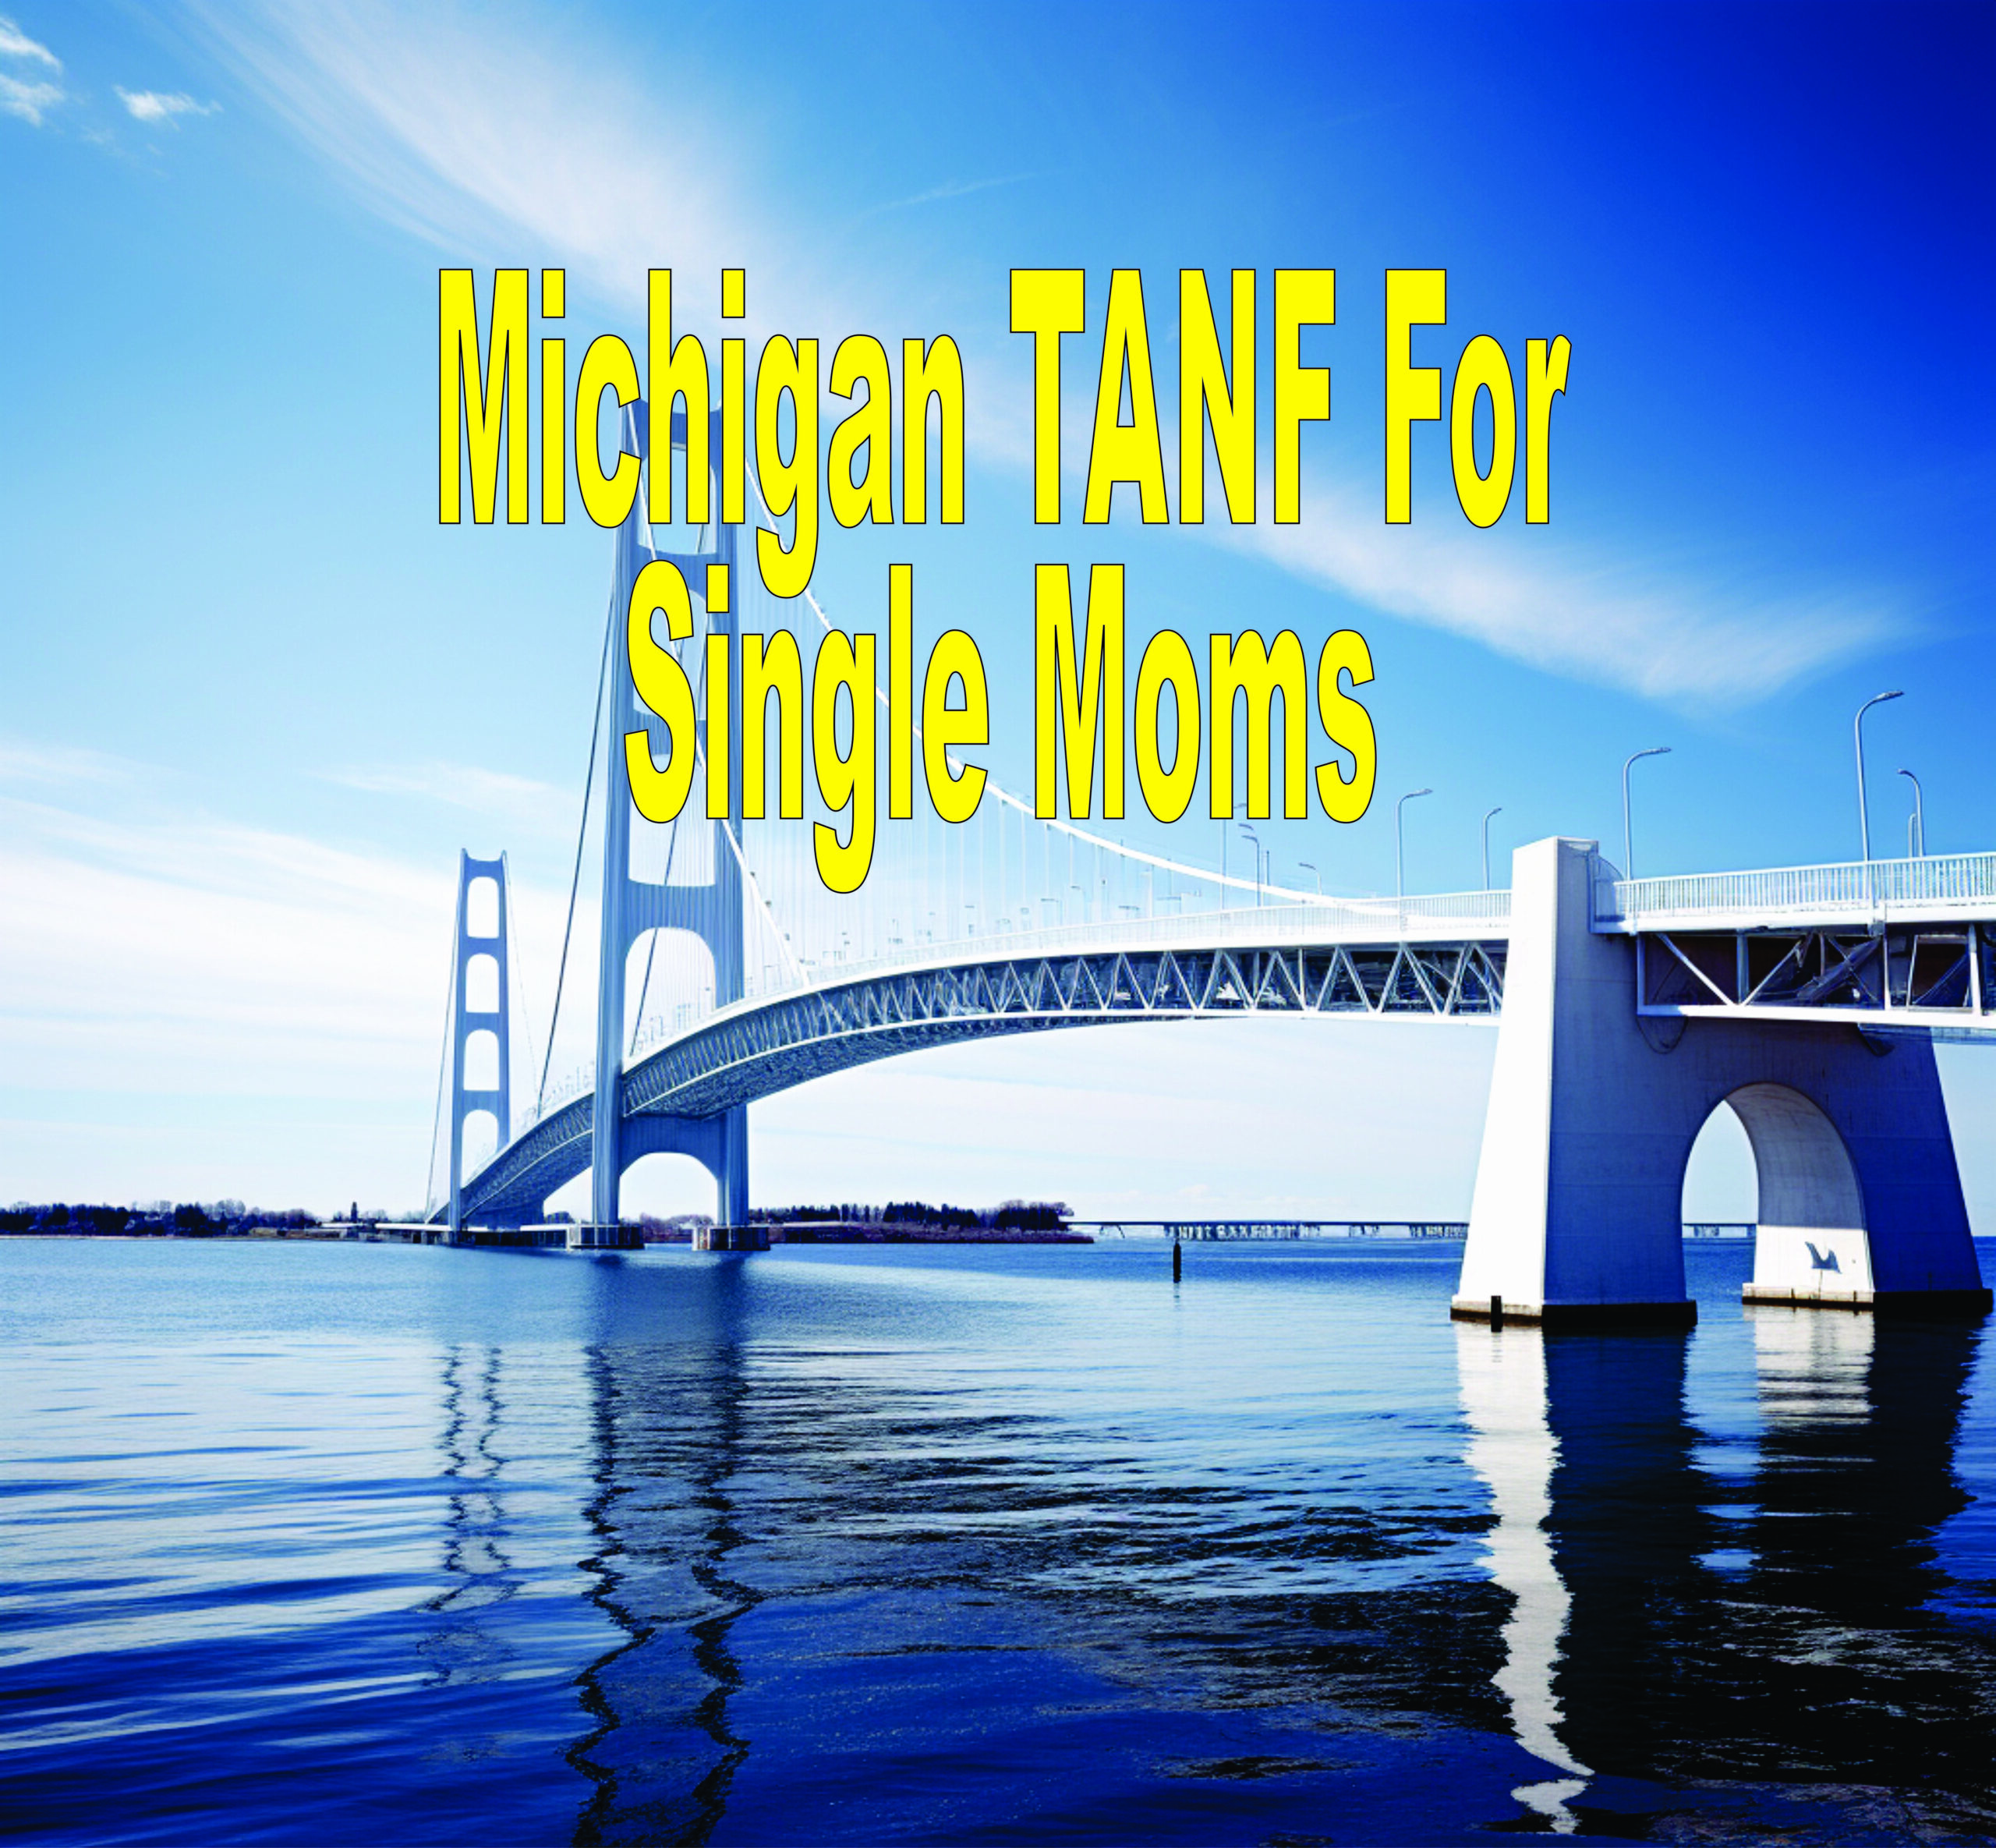 Michigan Tanf For Single Moms